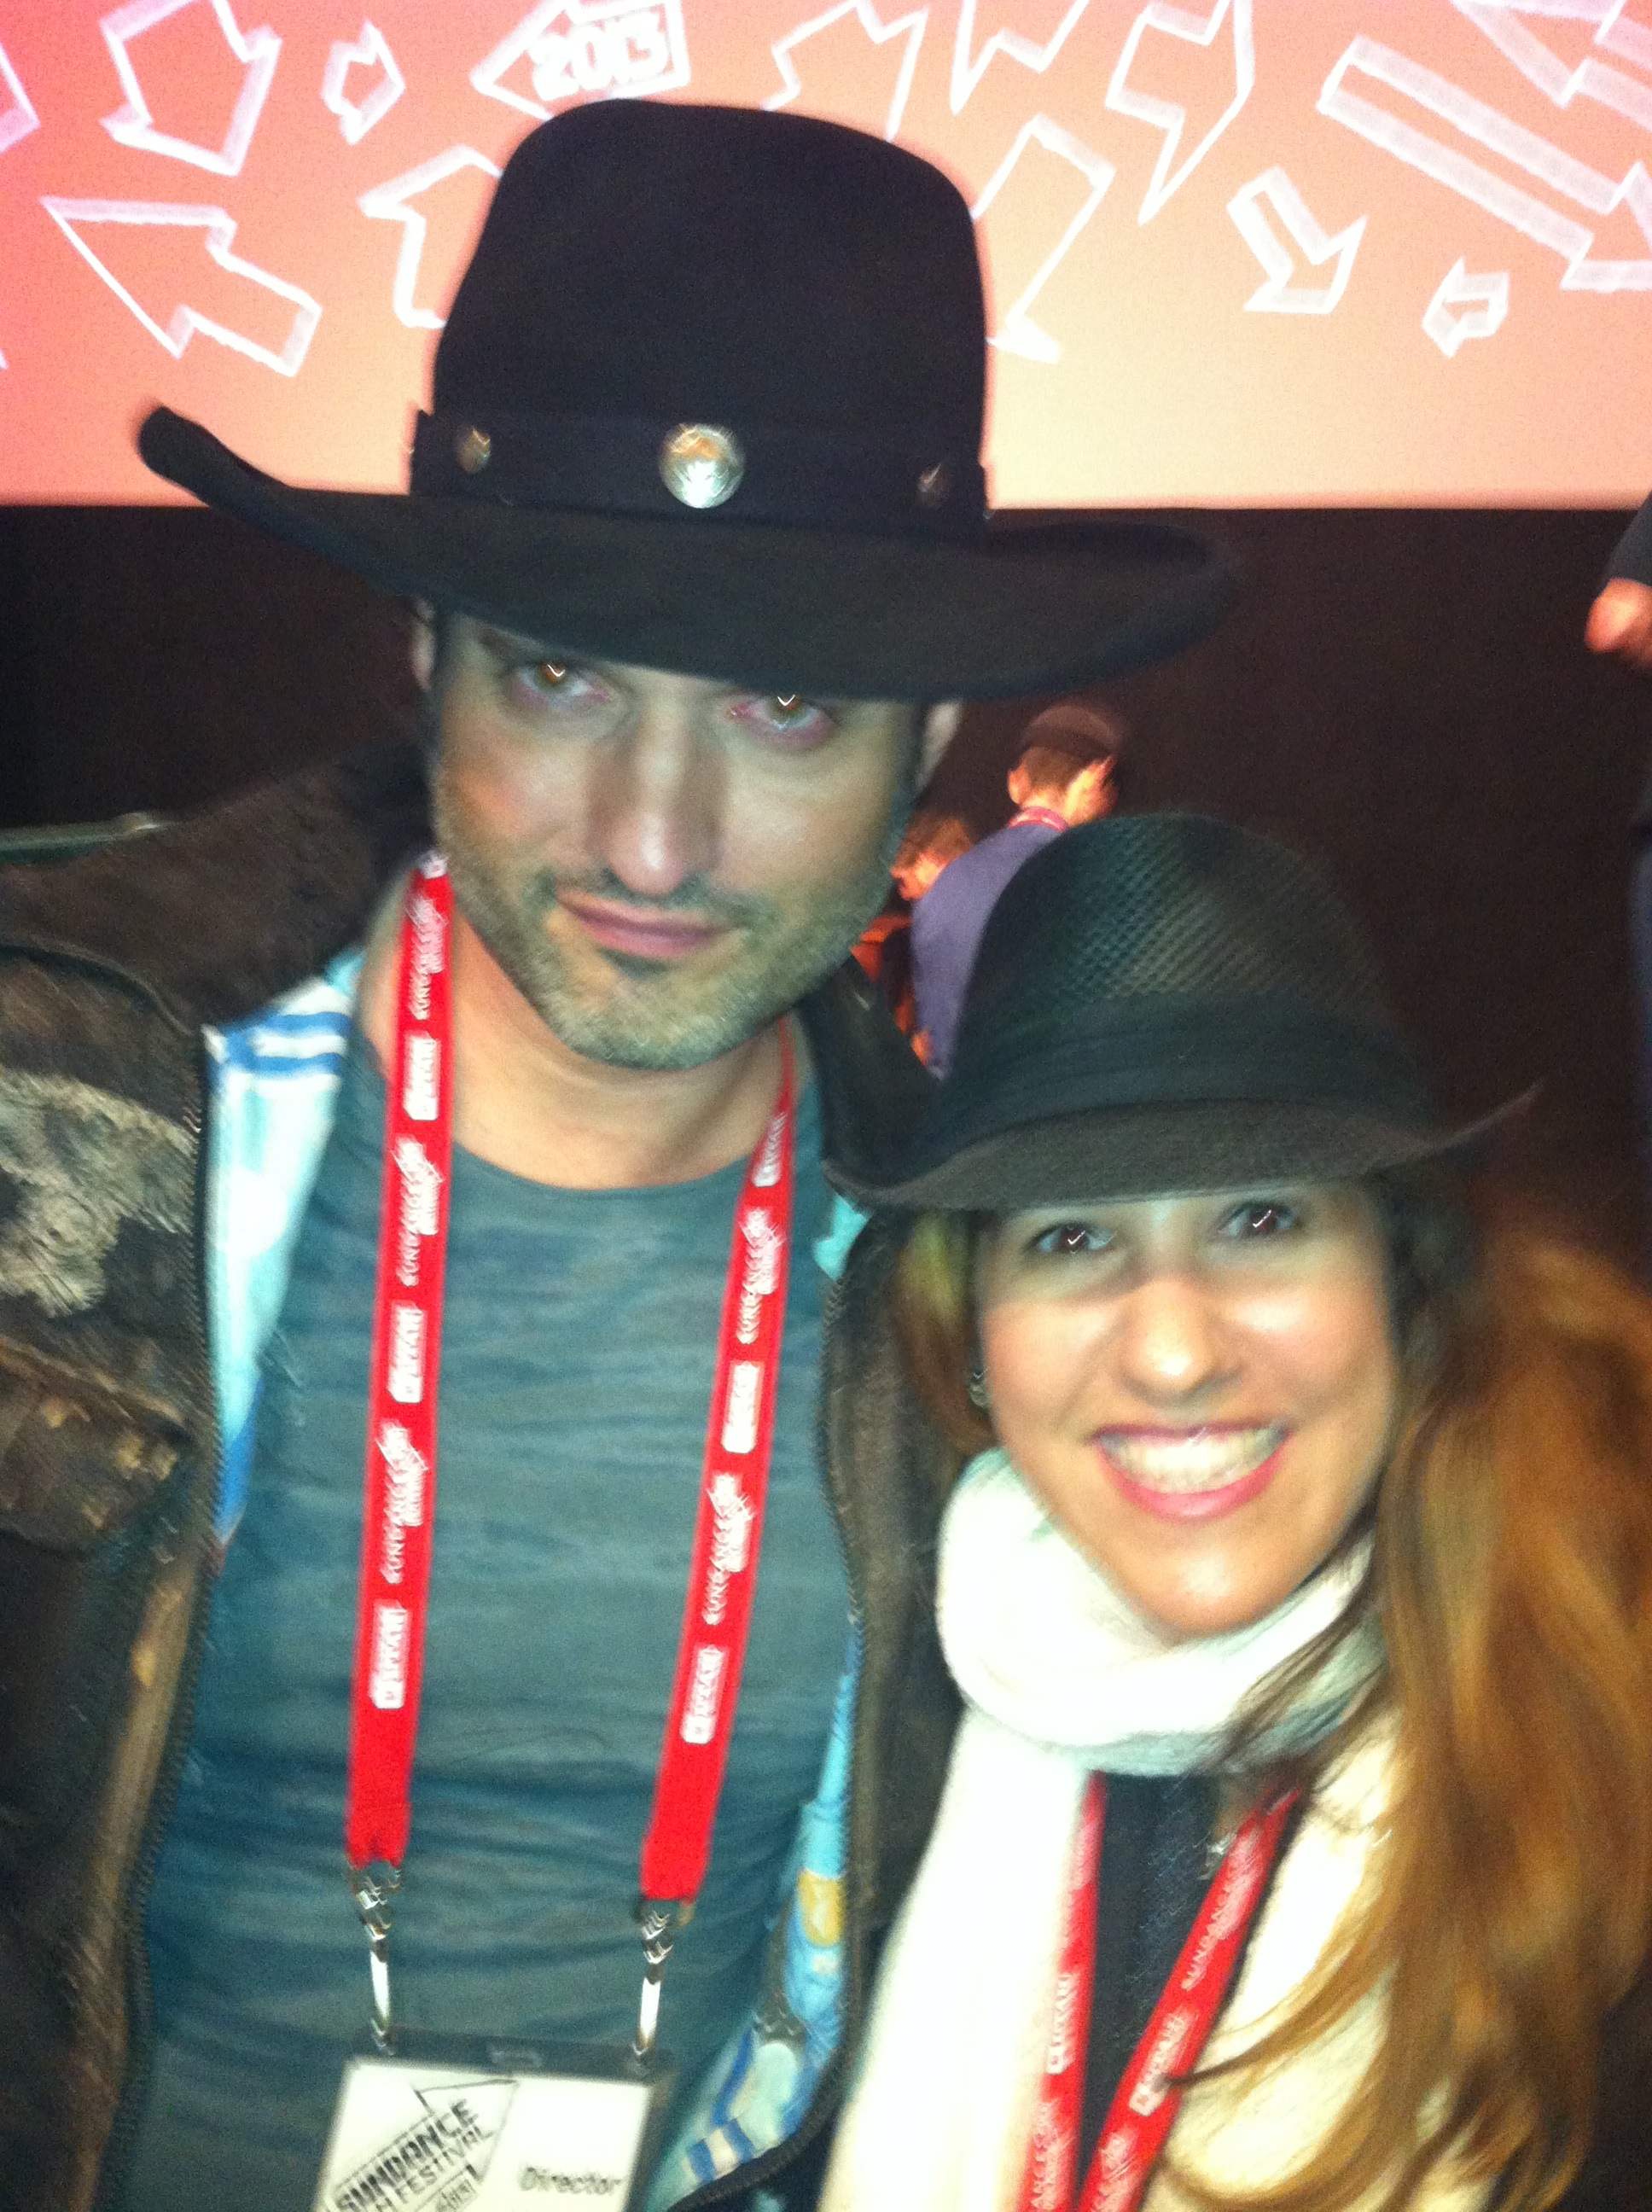 Sundance Film Festival 2013 with Director Robert Rodriguez